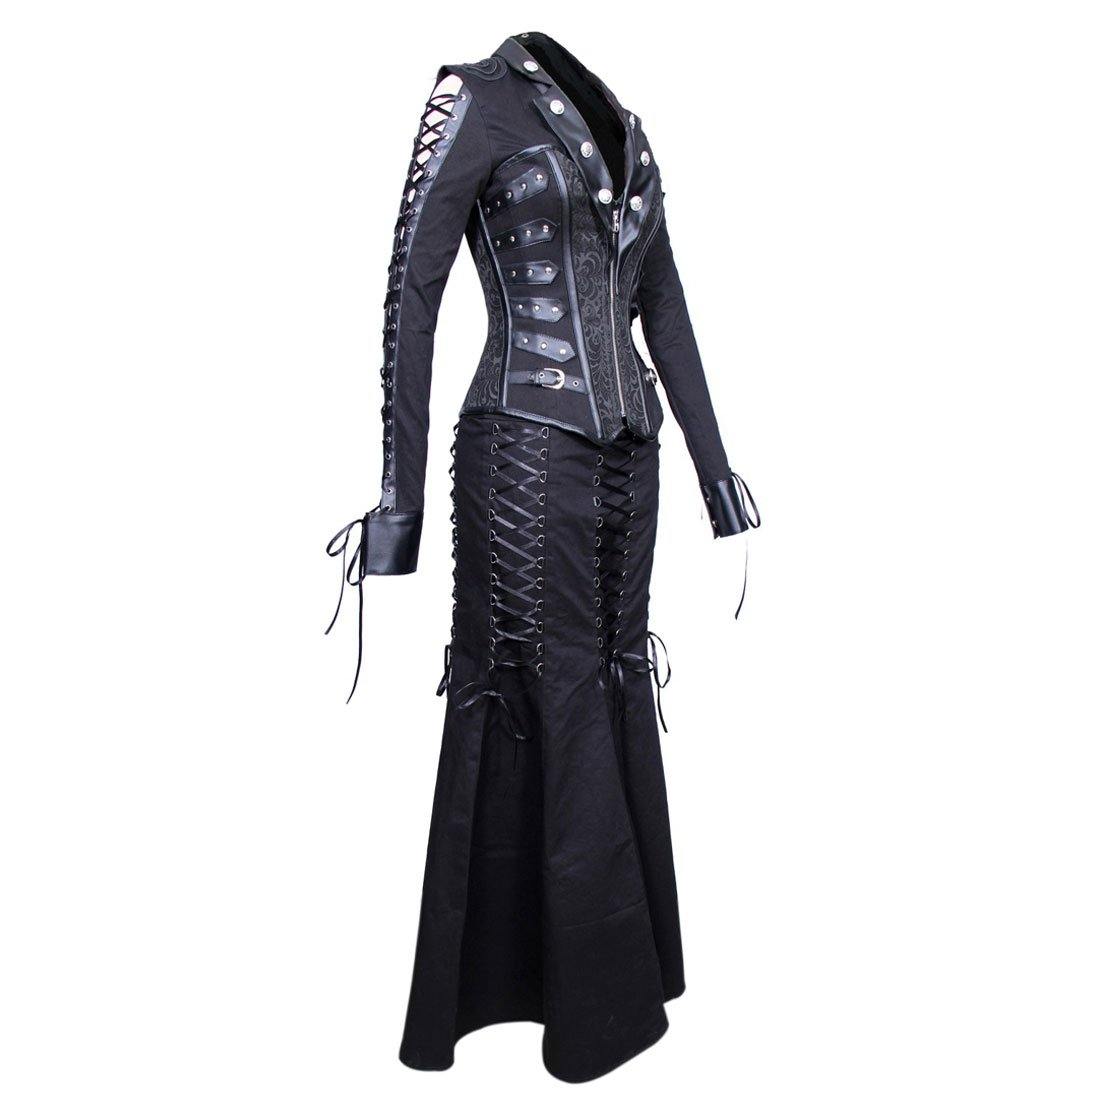 Sabella Gothic Authentic Steel Boned Overbust Corset Dress - Corset Revolution